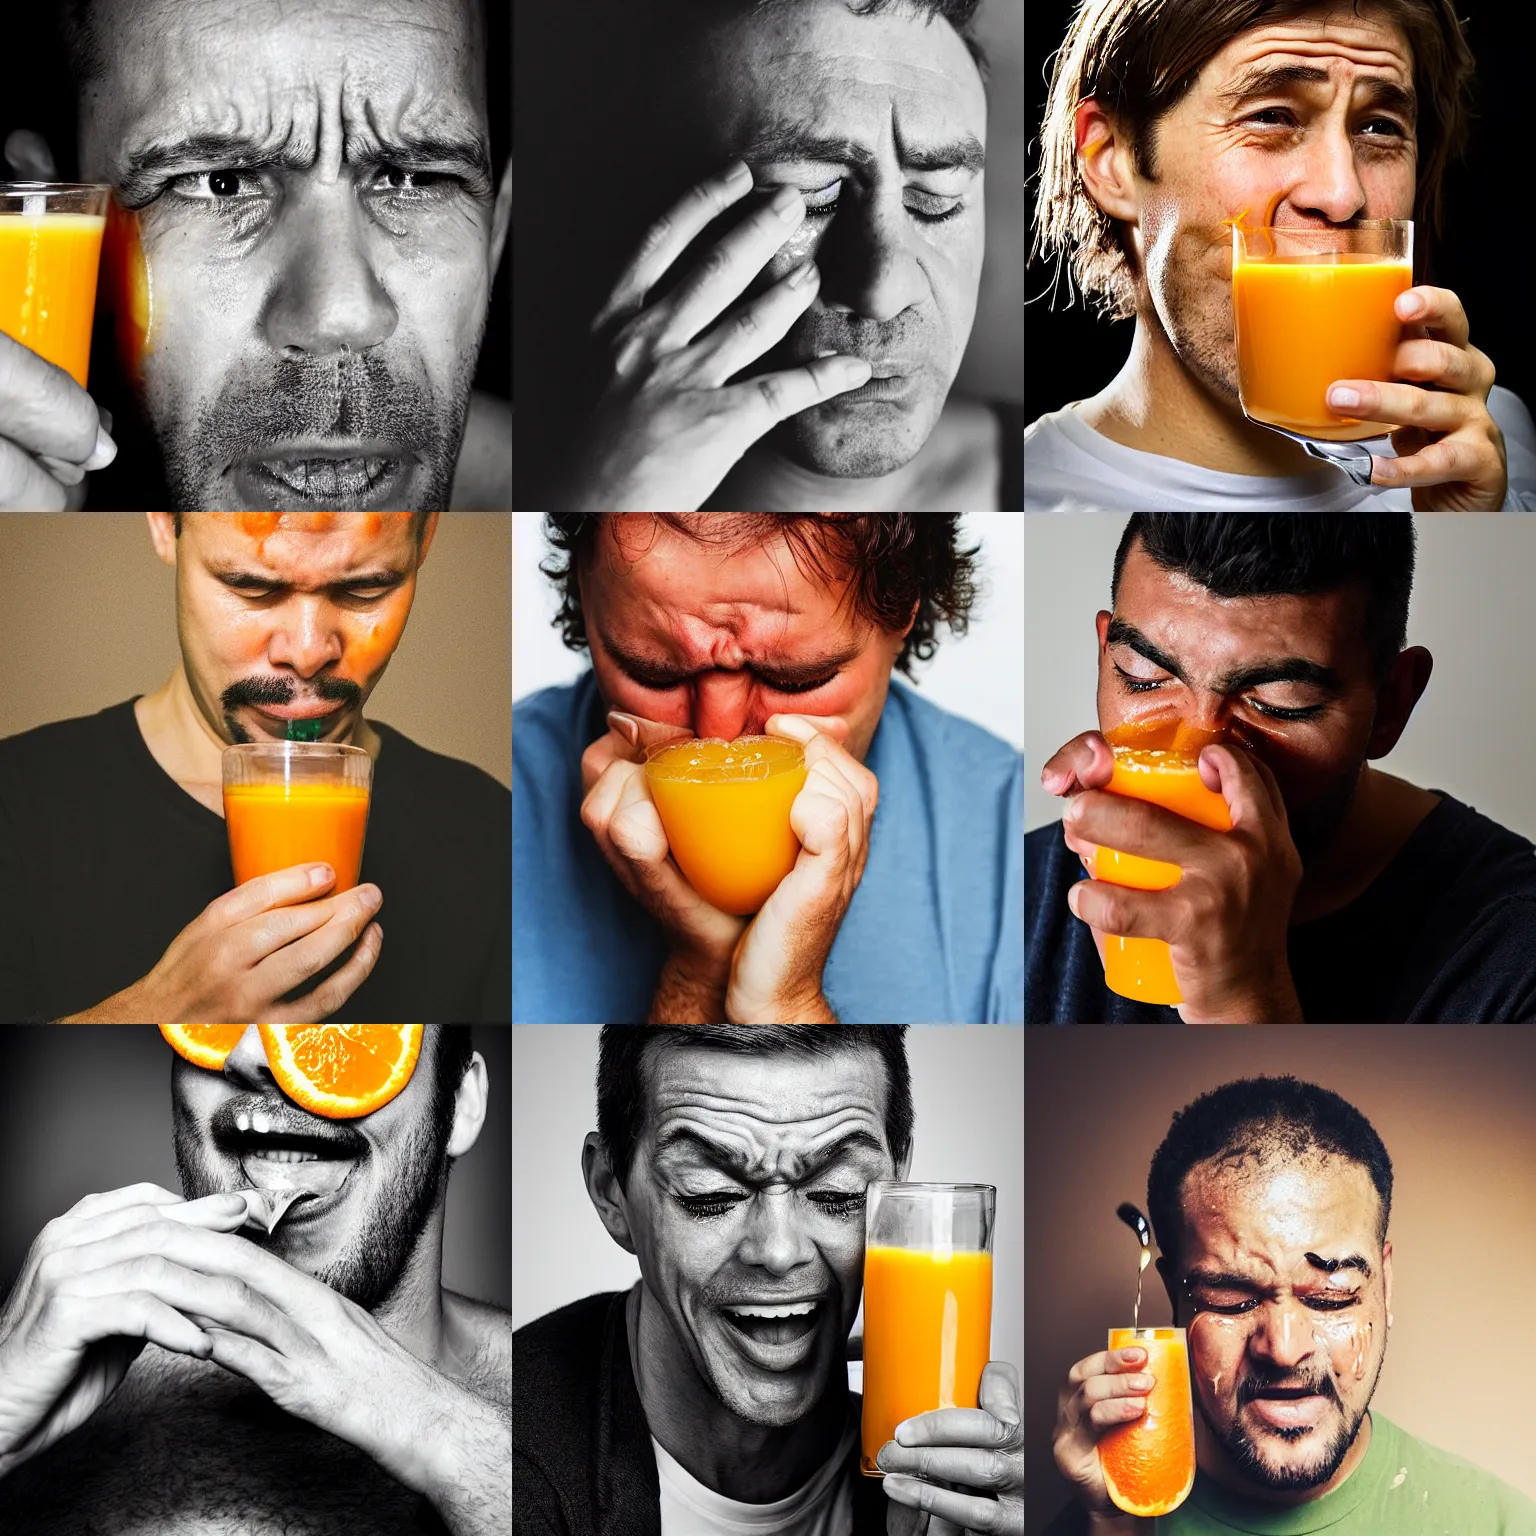 Prompt: man crying tears of orange juice, photograph portrait